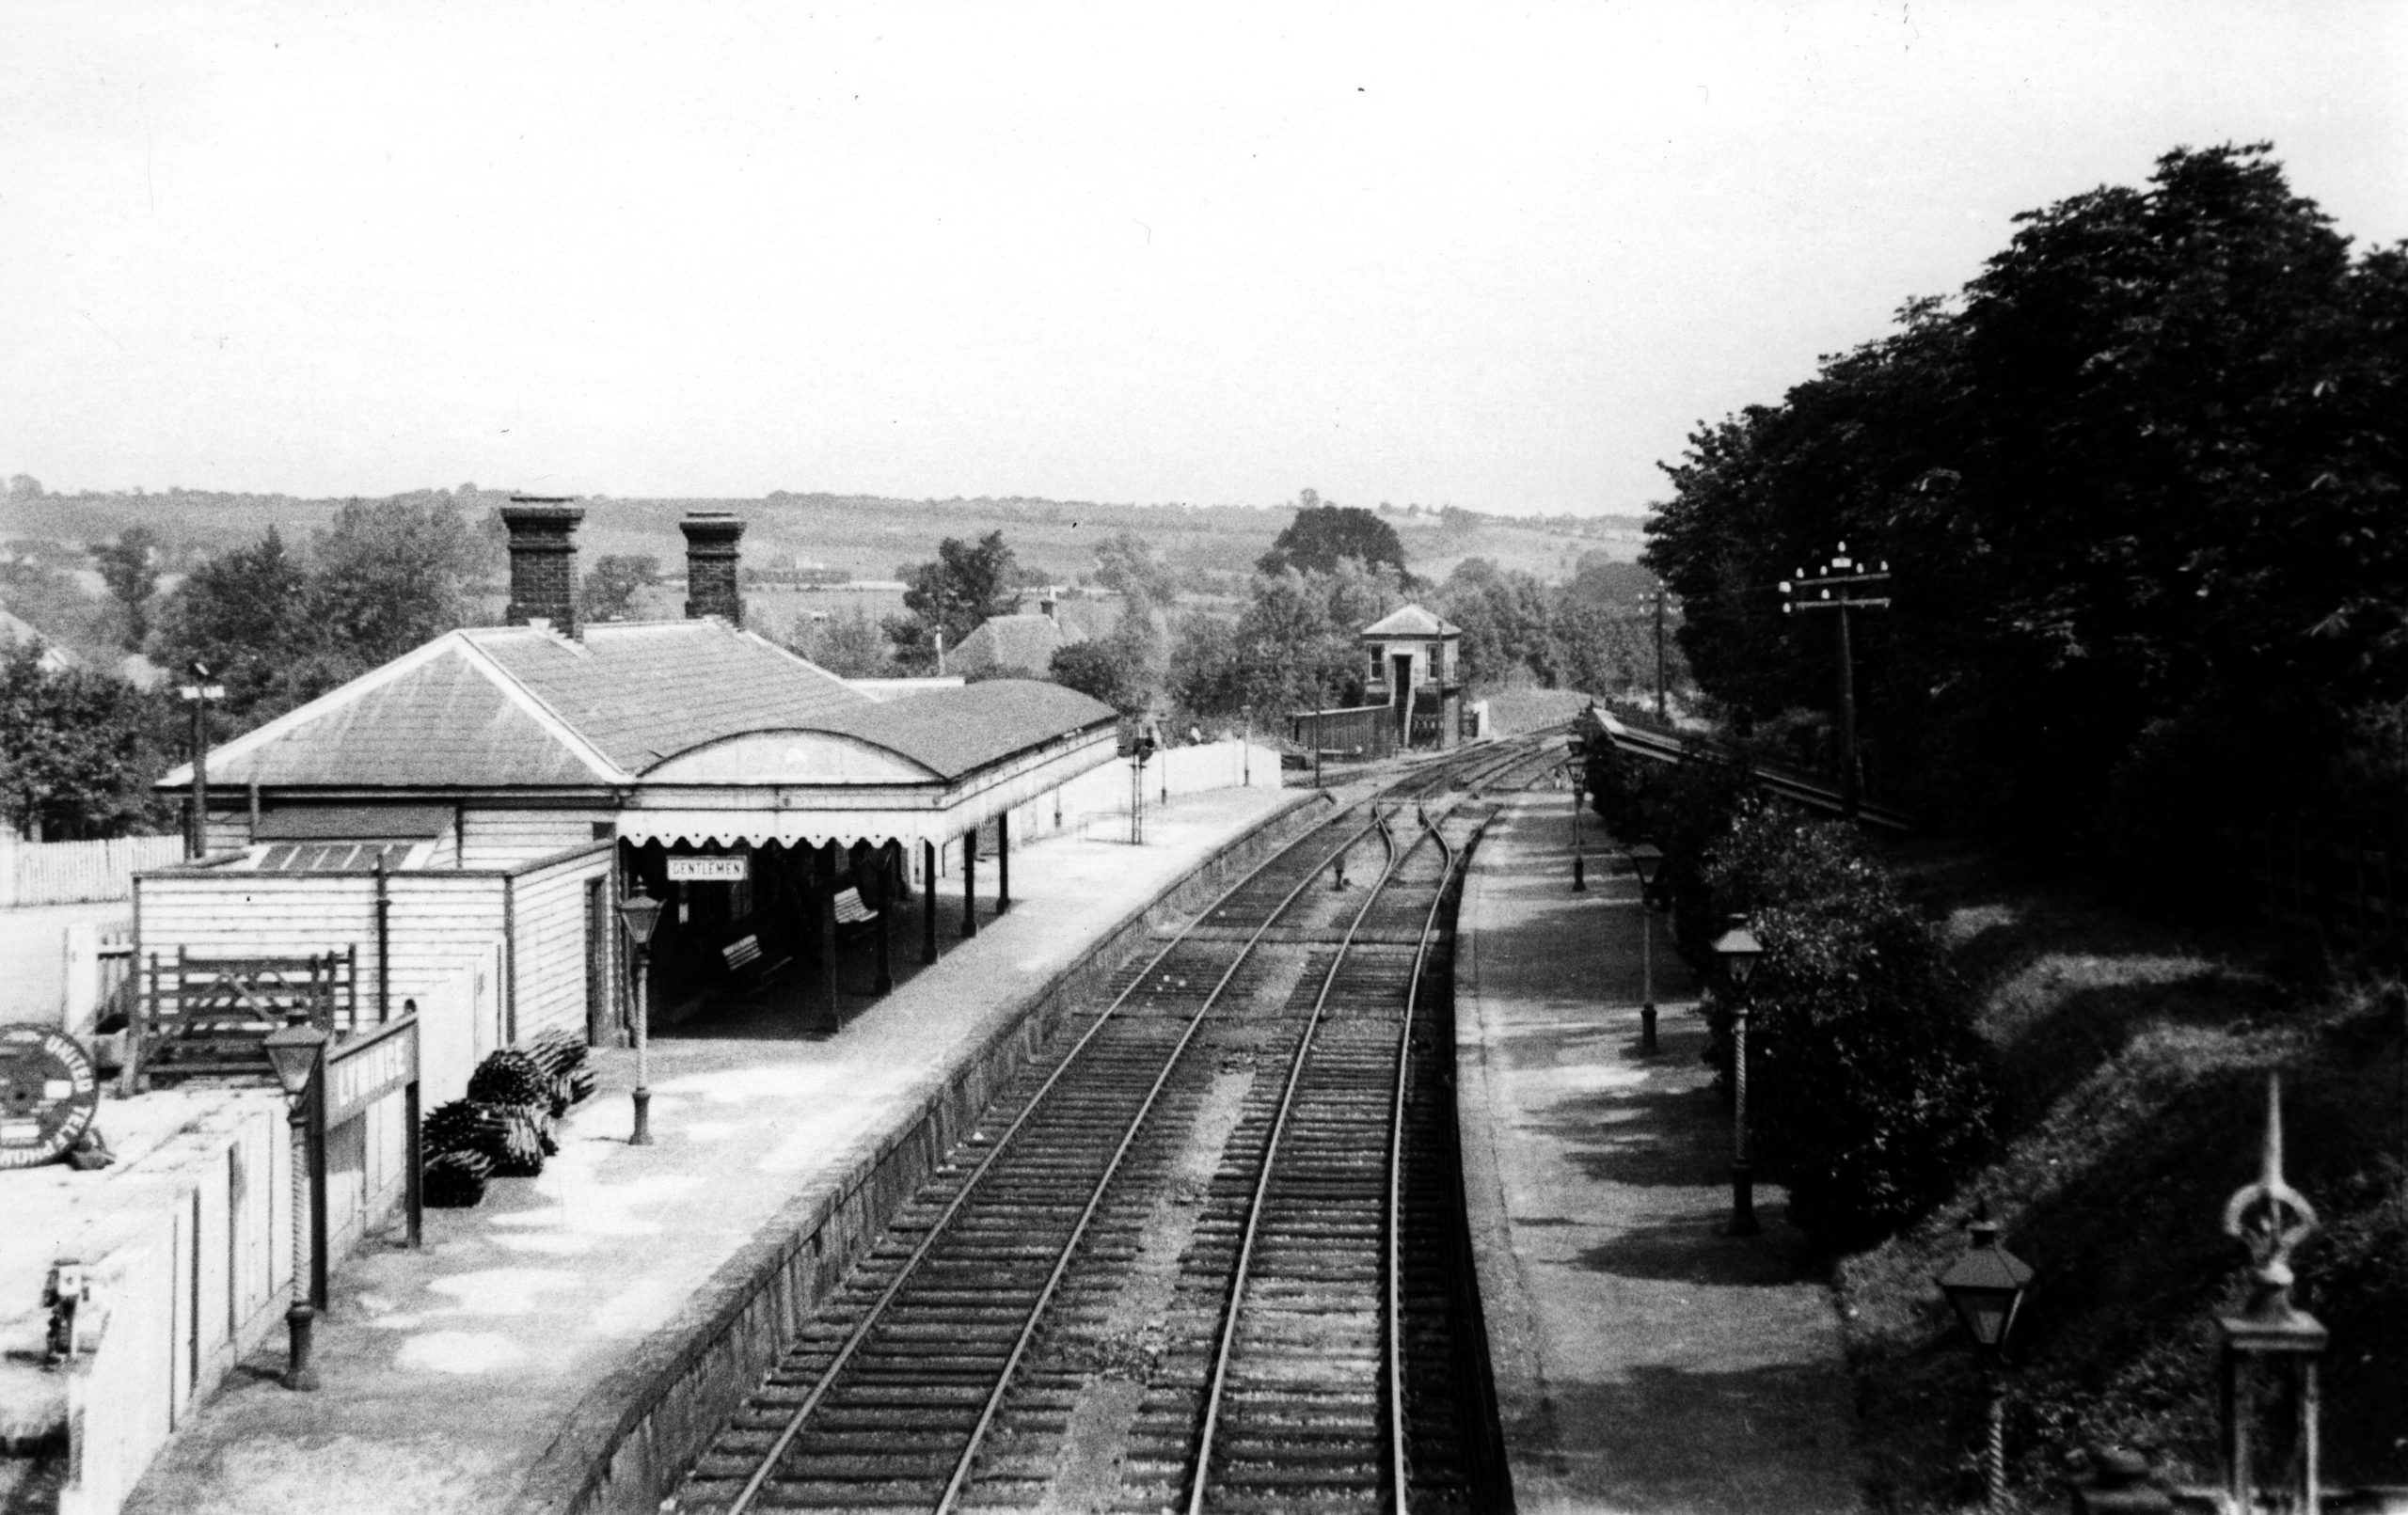 LHS - Lyminge Station 1936